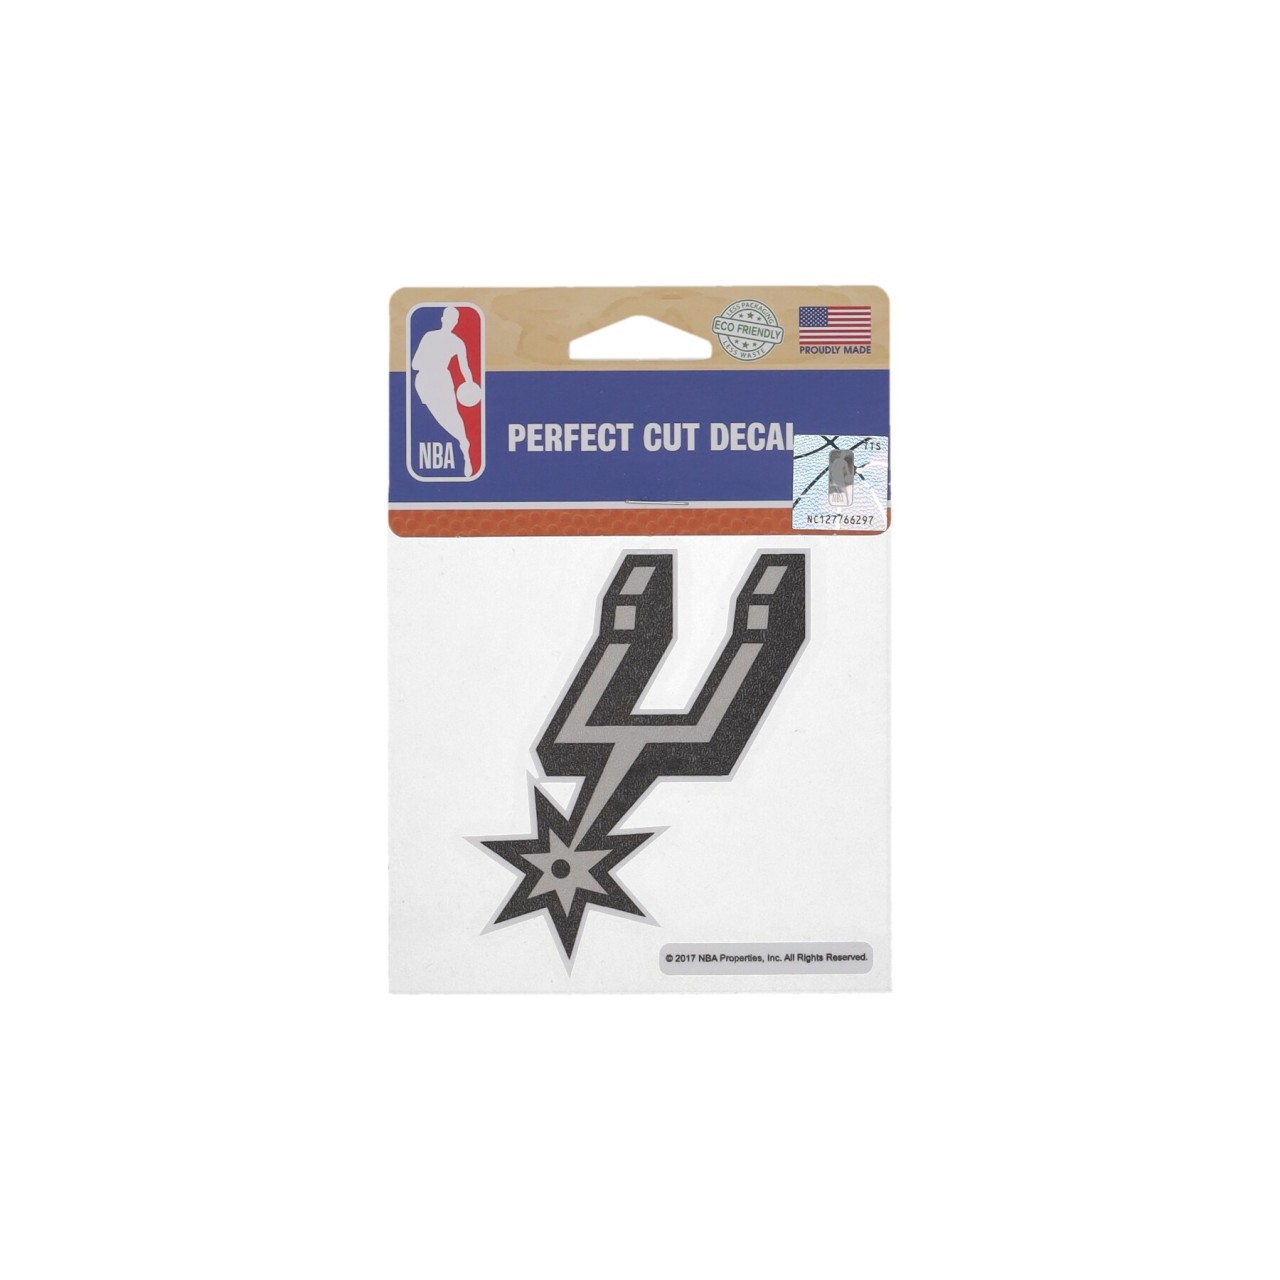 WINCRAFT NBA 4 x 4” PERFECT CUT DECAL SAASPU 21759017